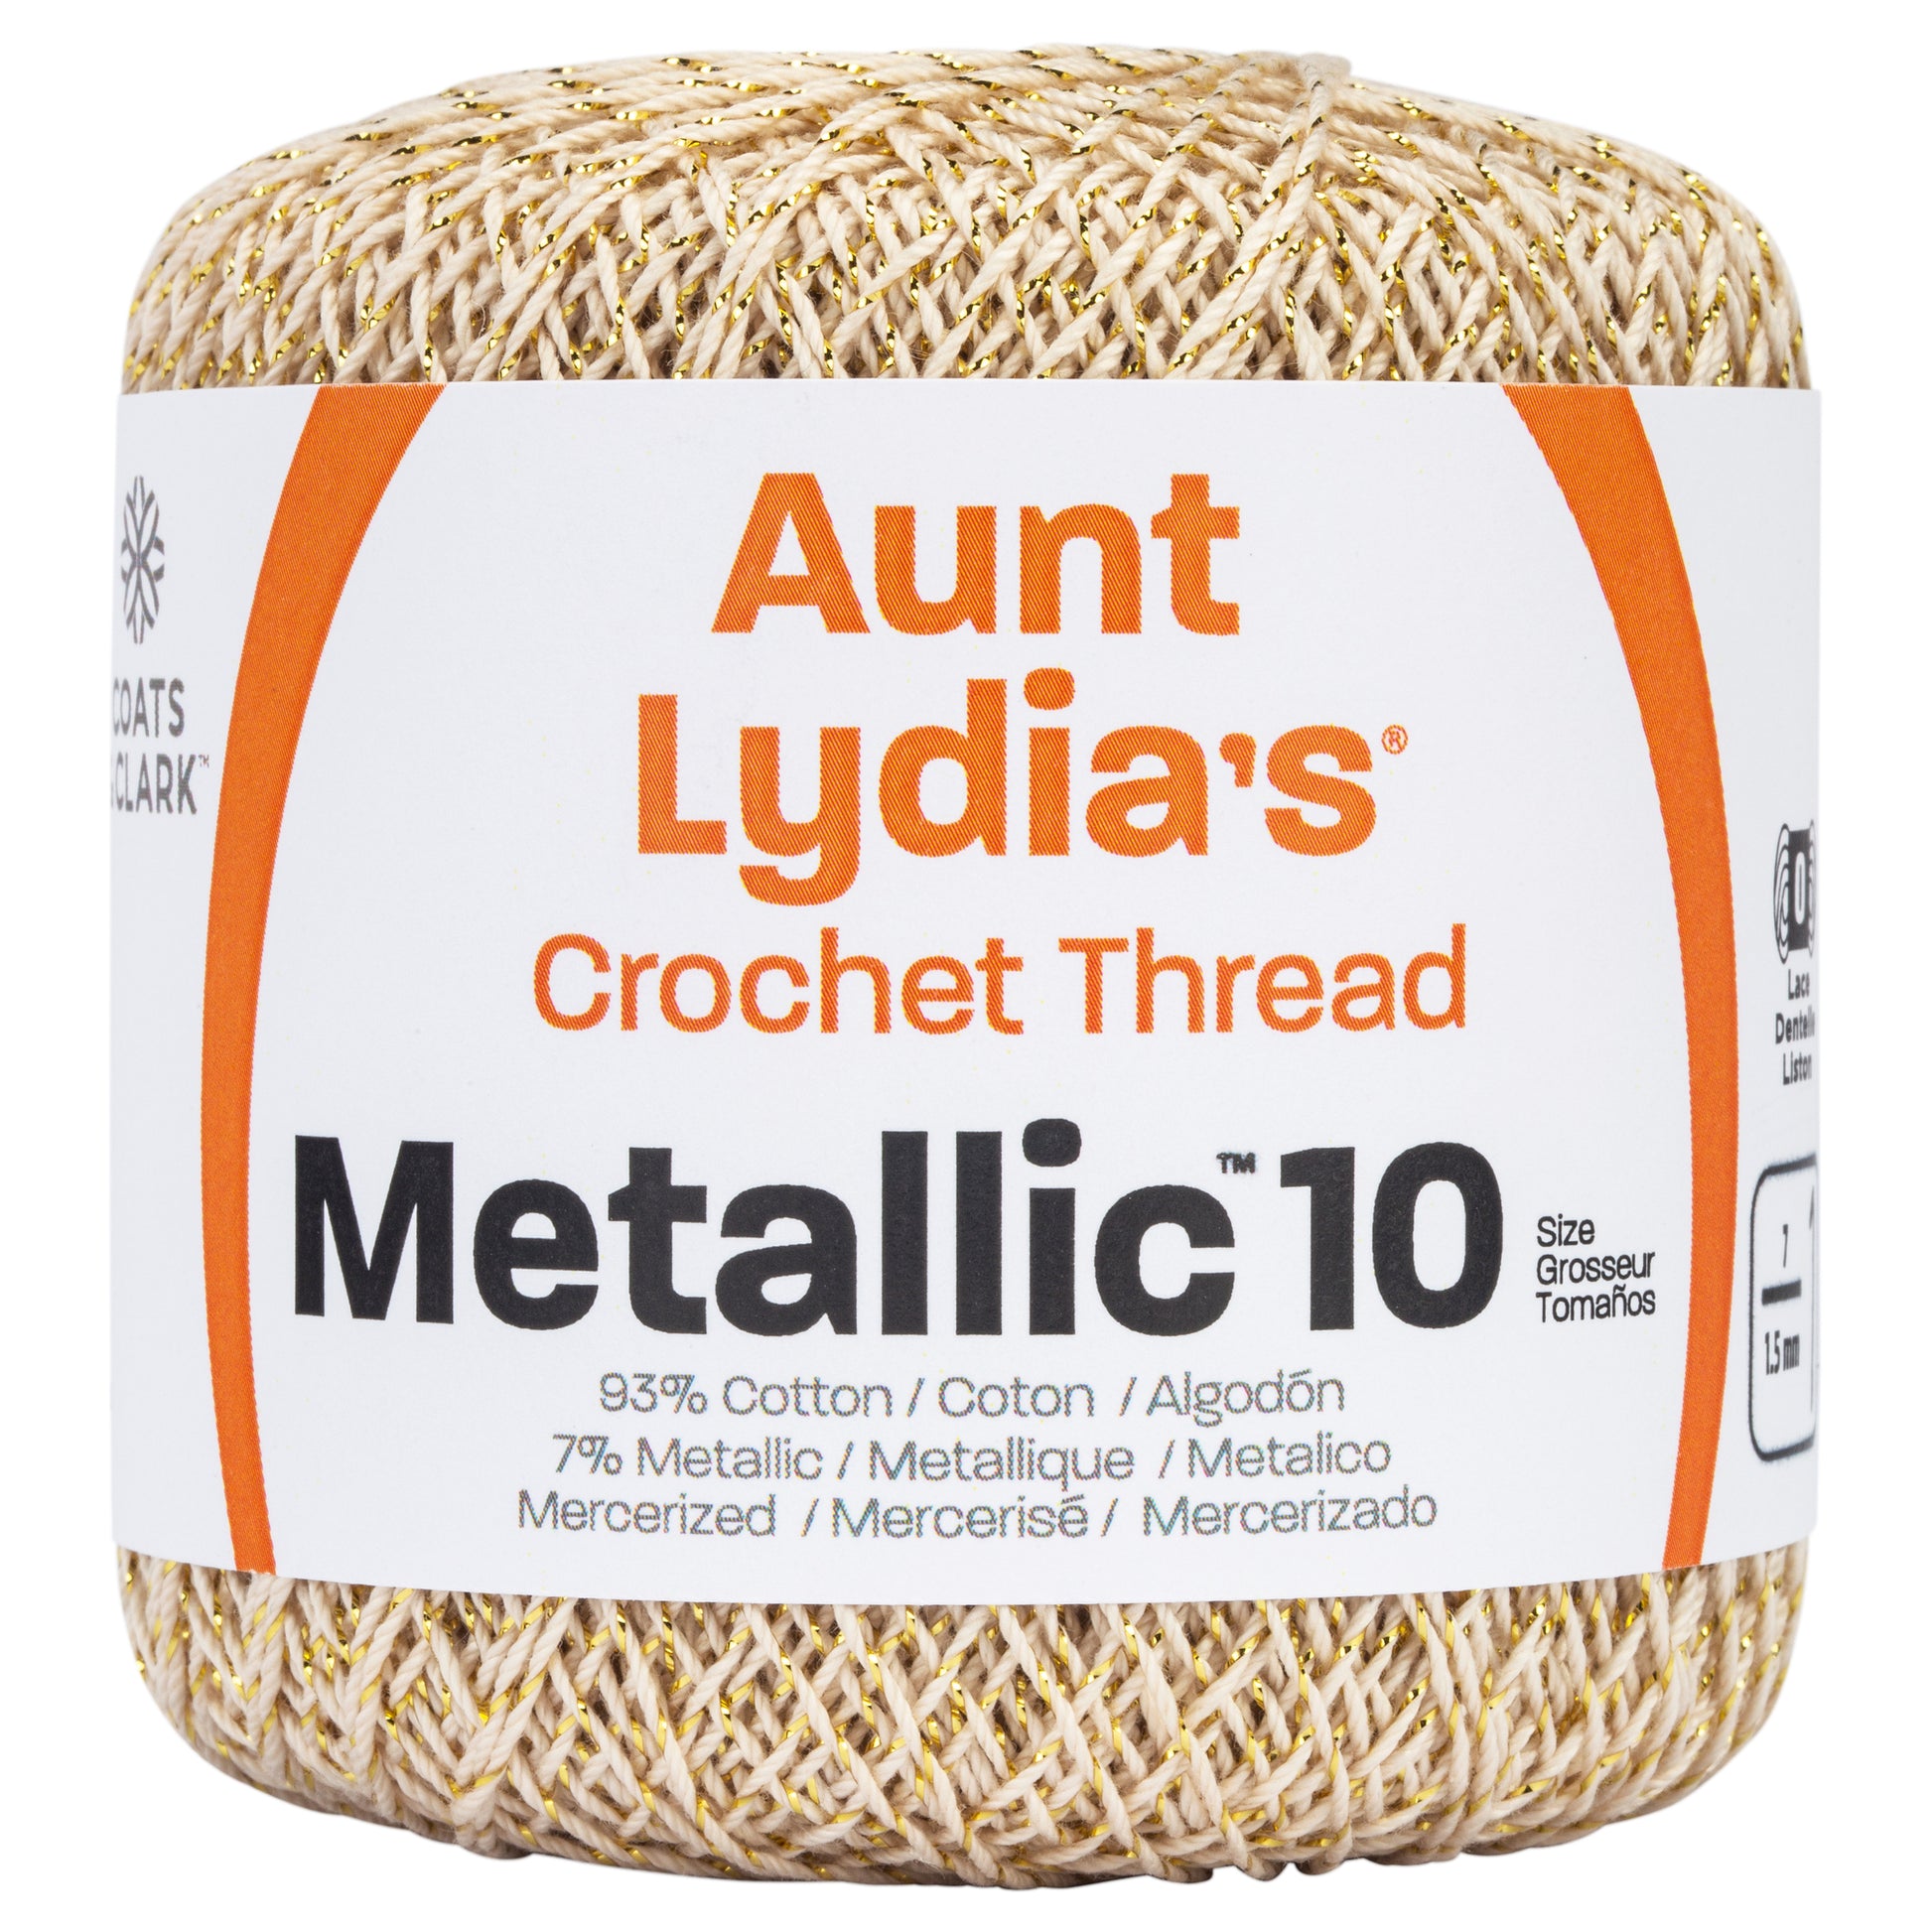 Aunt Lydia's Metallic Crochet Thread Size 10 Silver & Silver